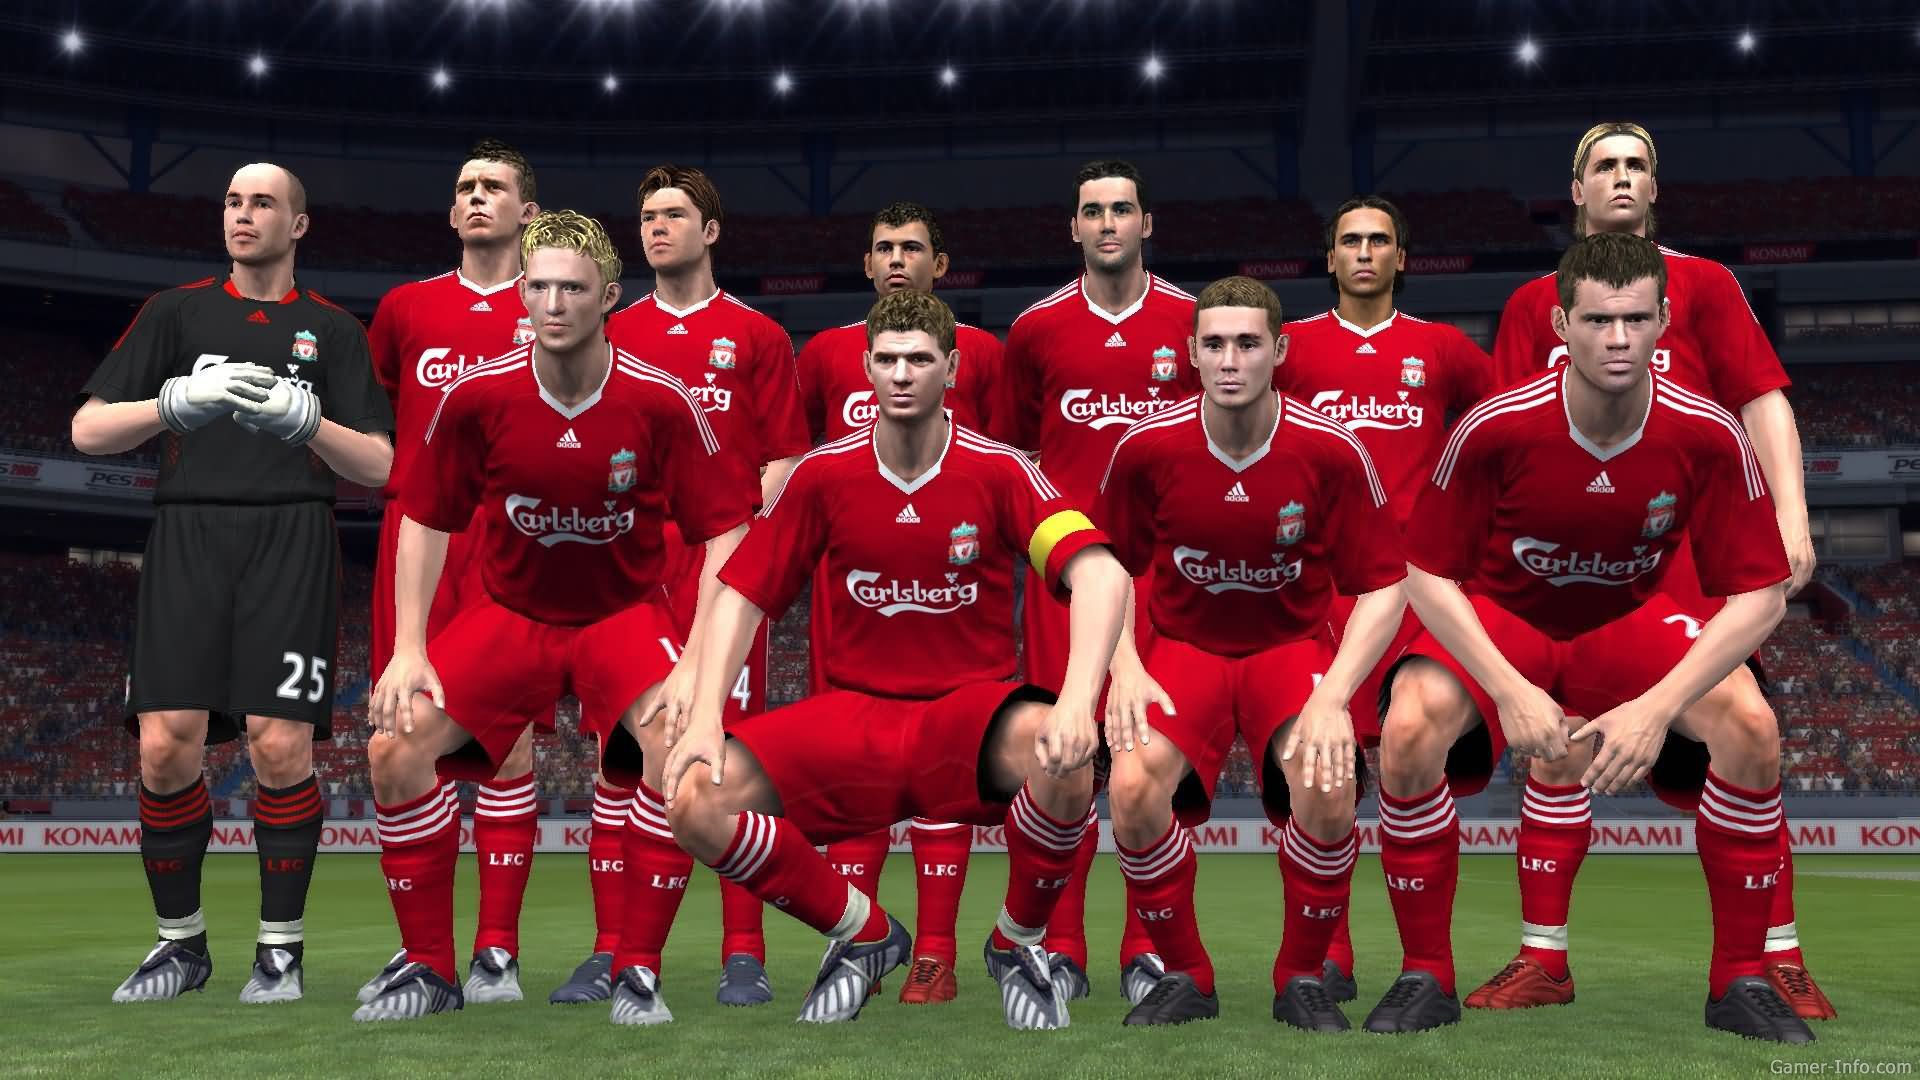 Pro Evolution Soccer 2009 (2008 video game)